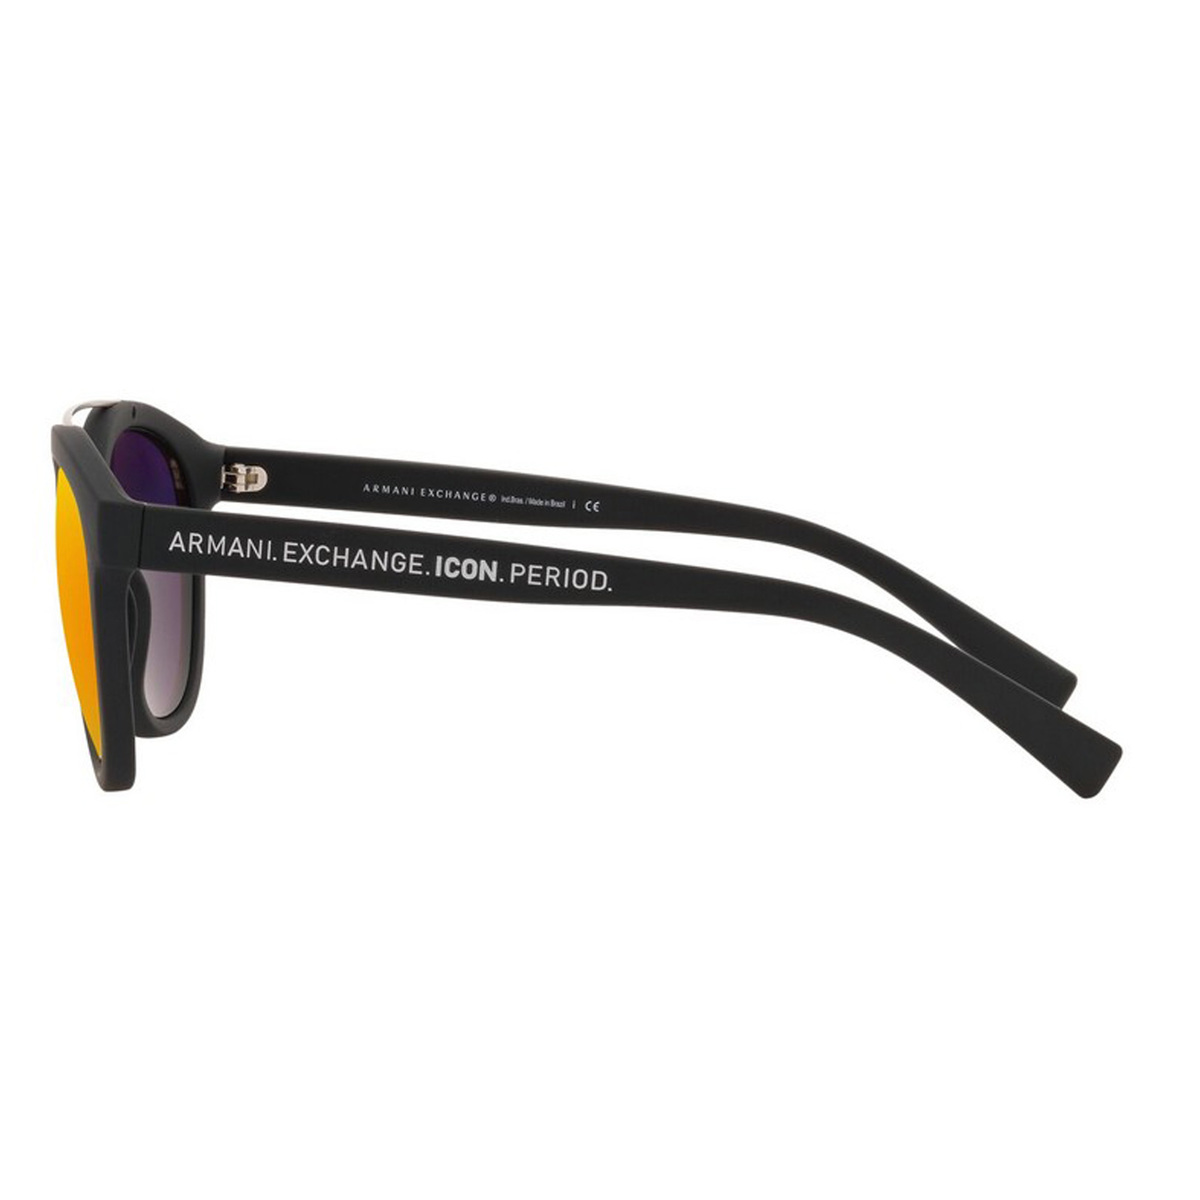 Armani Exchange Phantos Unisex Sunglasses, Dark Violet Mirror Red, 4118S54-80786Q